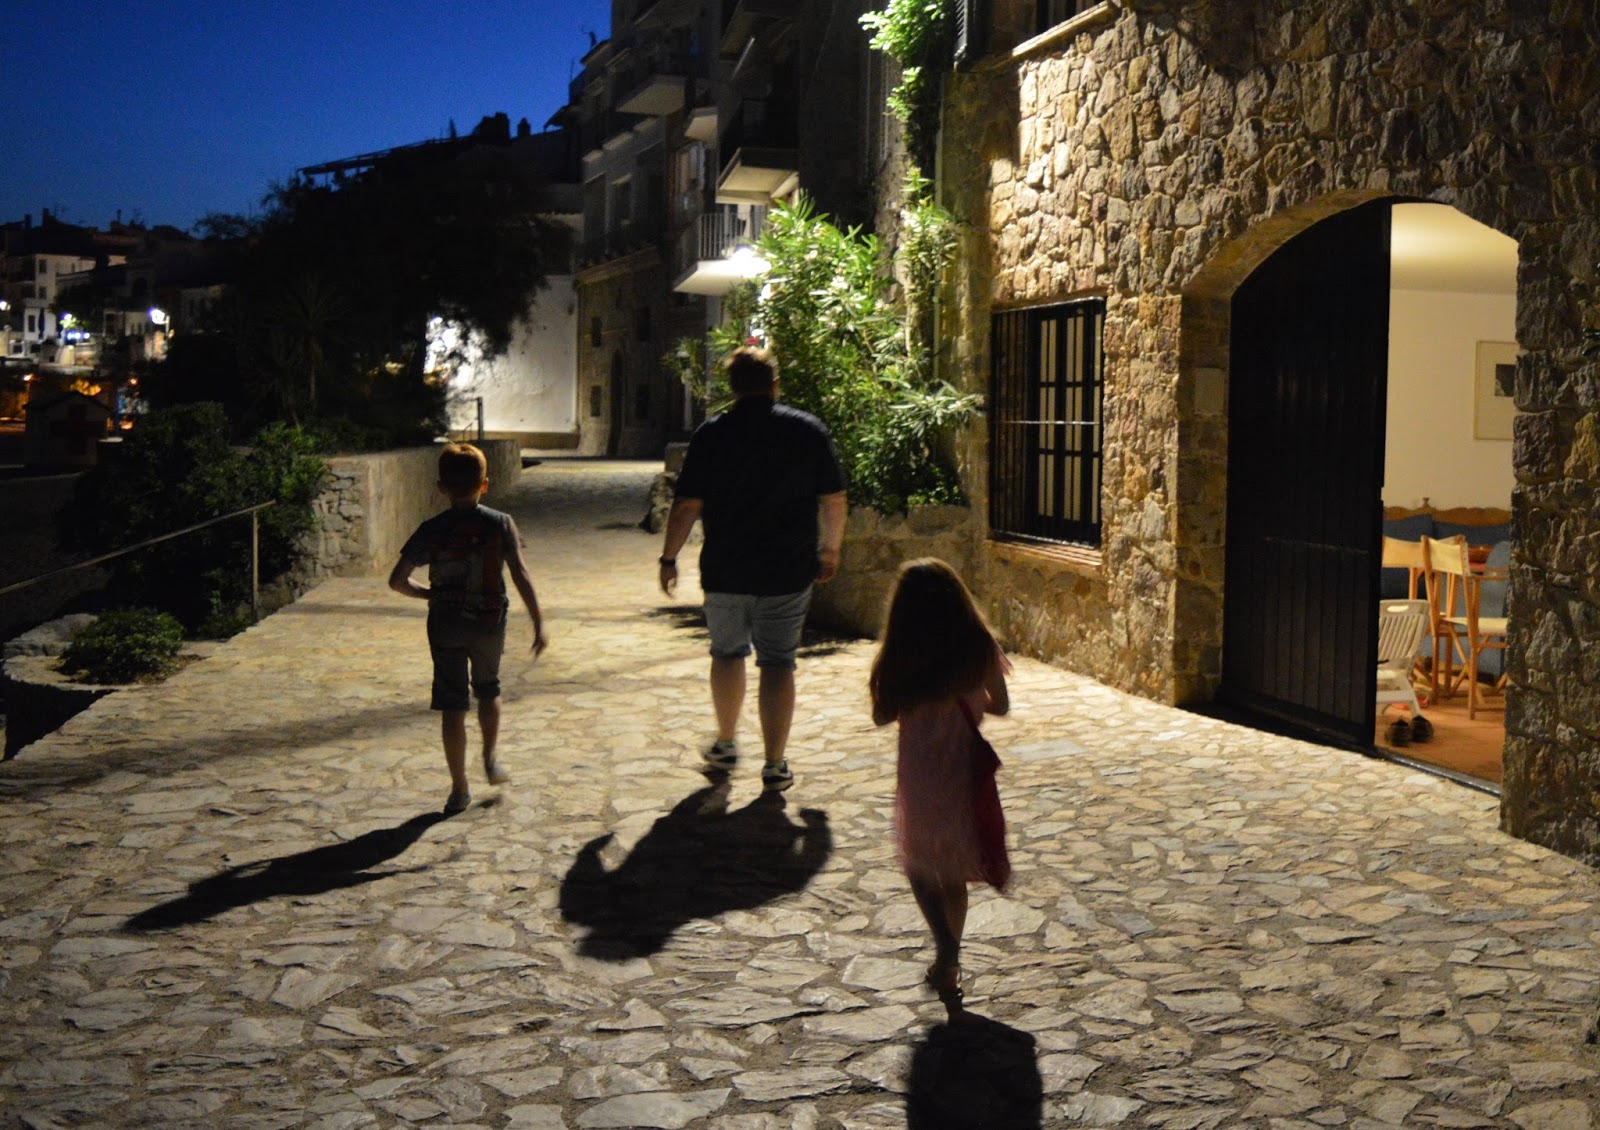 A walk from Calella de Palafrugell to Llafranc - Calella at night